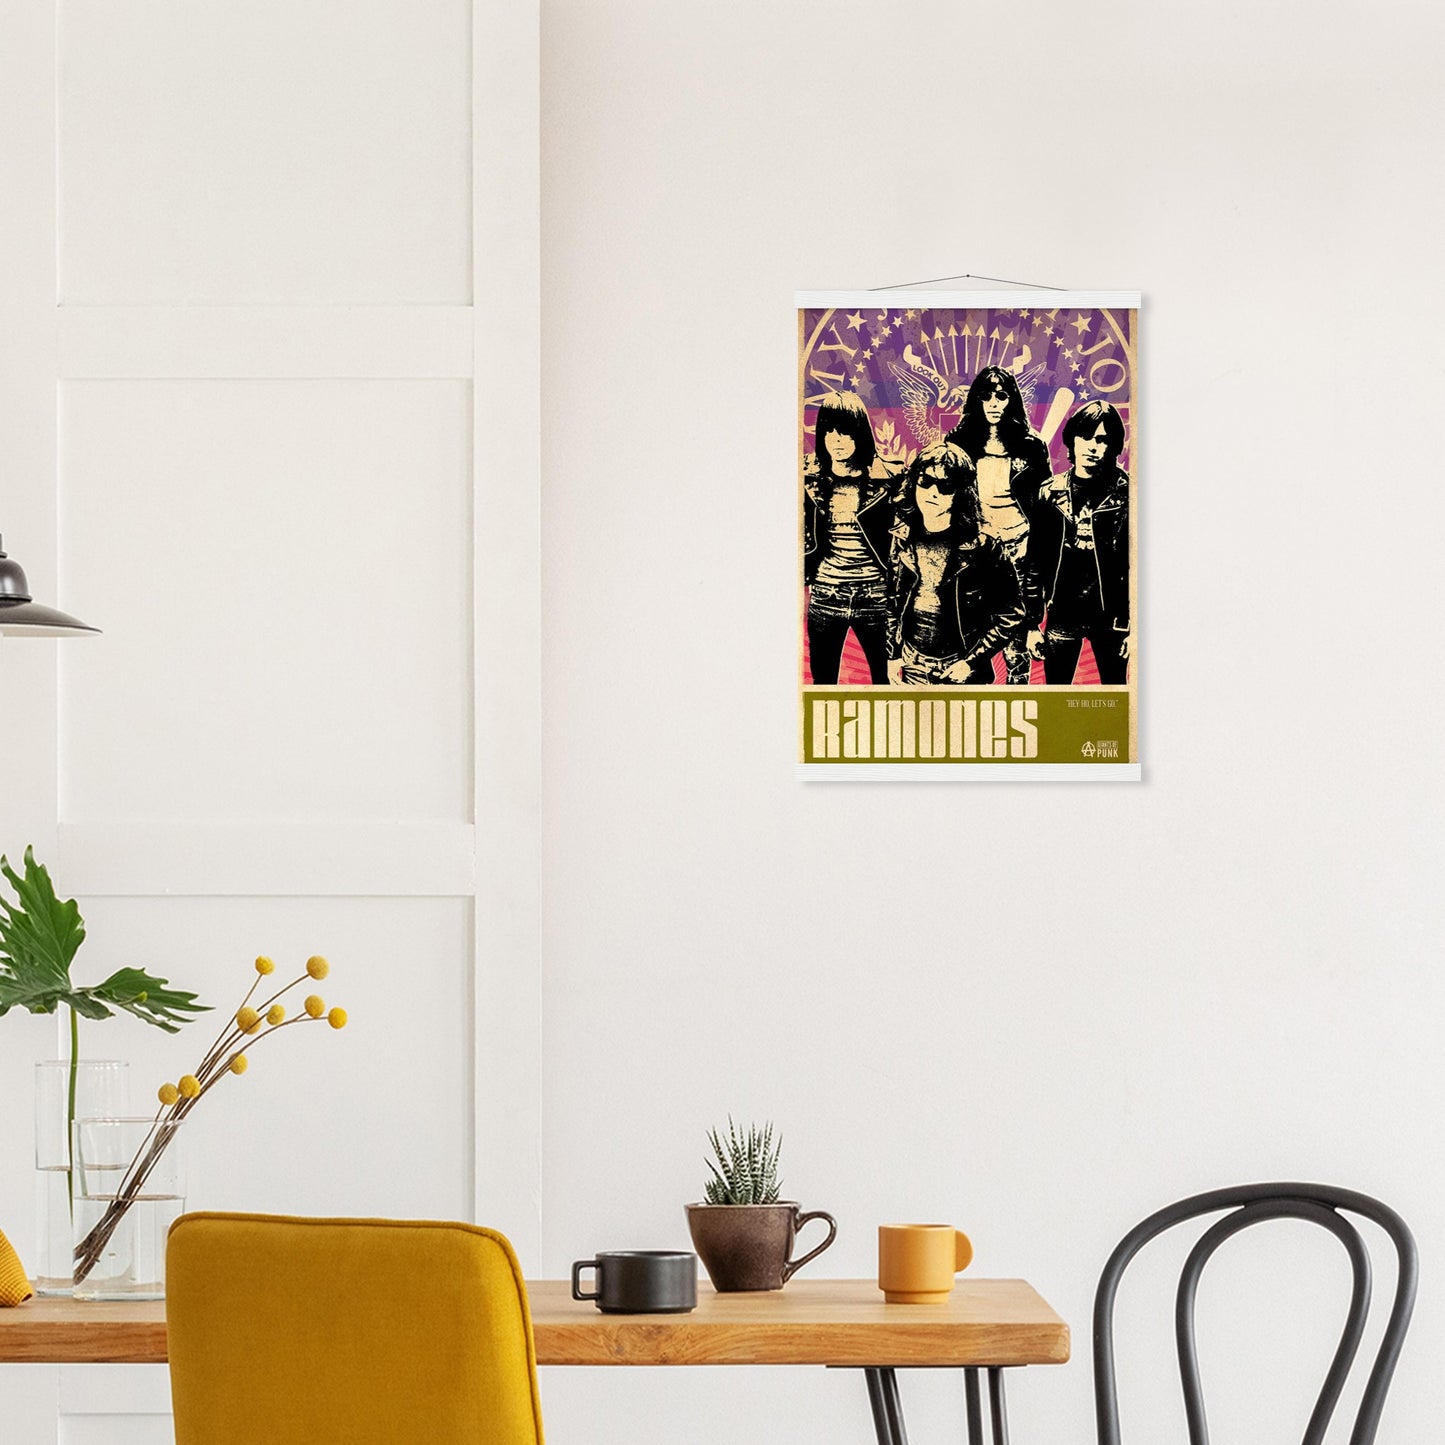 Ramones Vintage Poster reprint on Premium Poster Matte Paper - Posterify